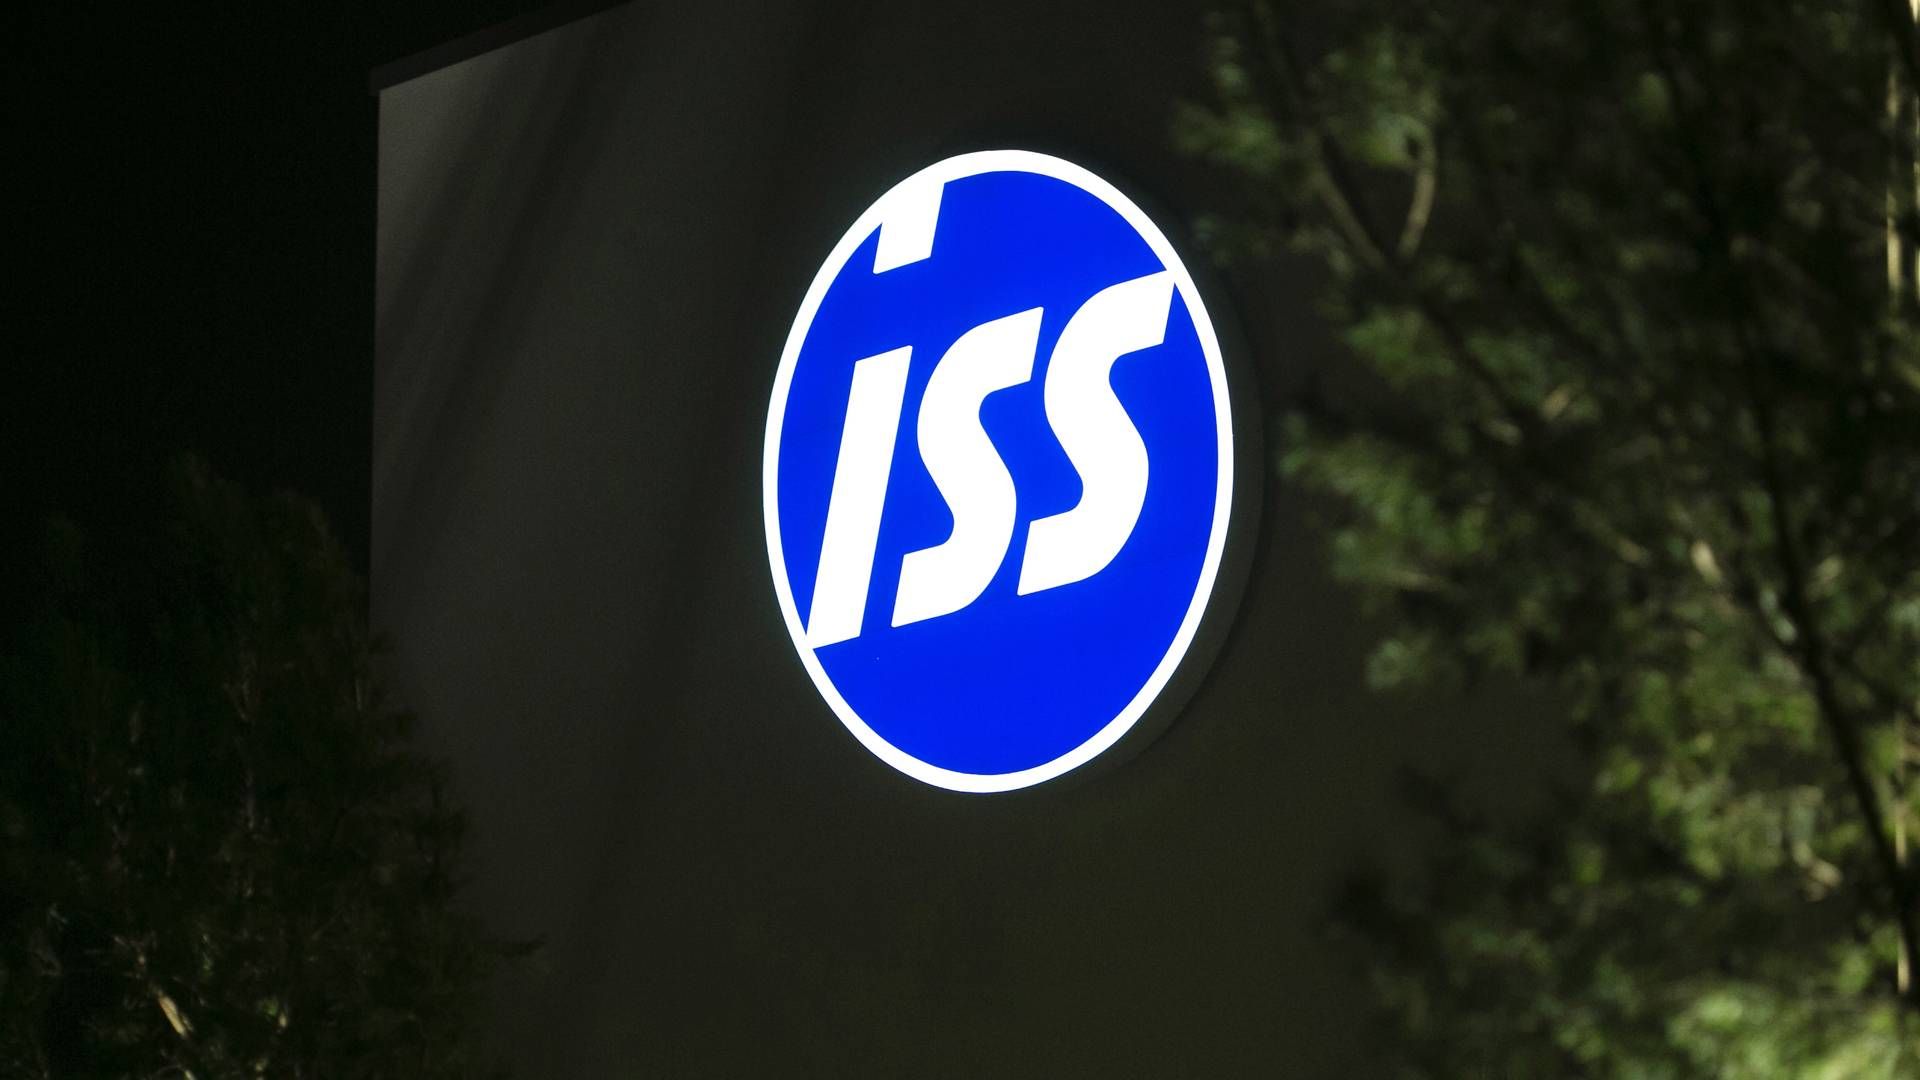 ISS Danmark fik sidste år et underkud på 436 mio. kr. | Foto: Miriam Dalsgaard